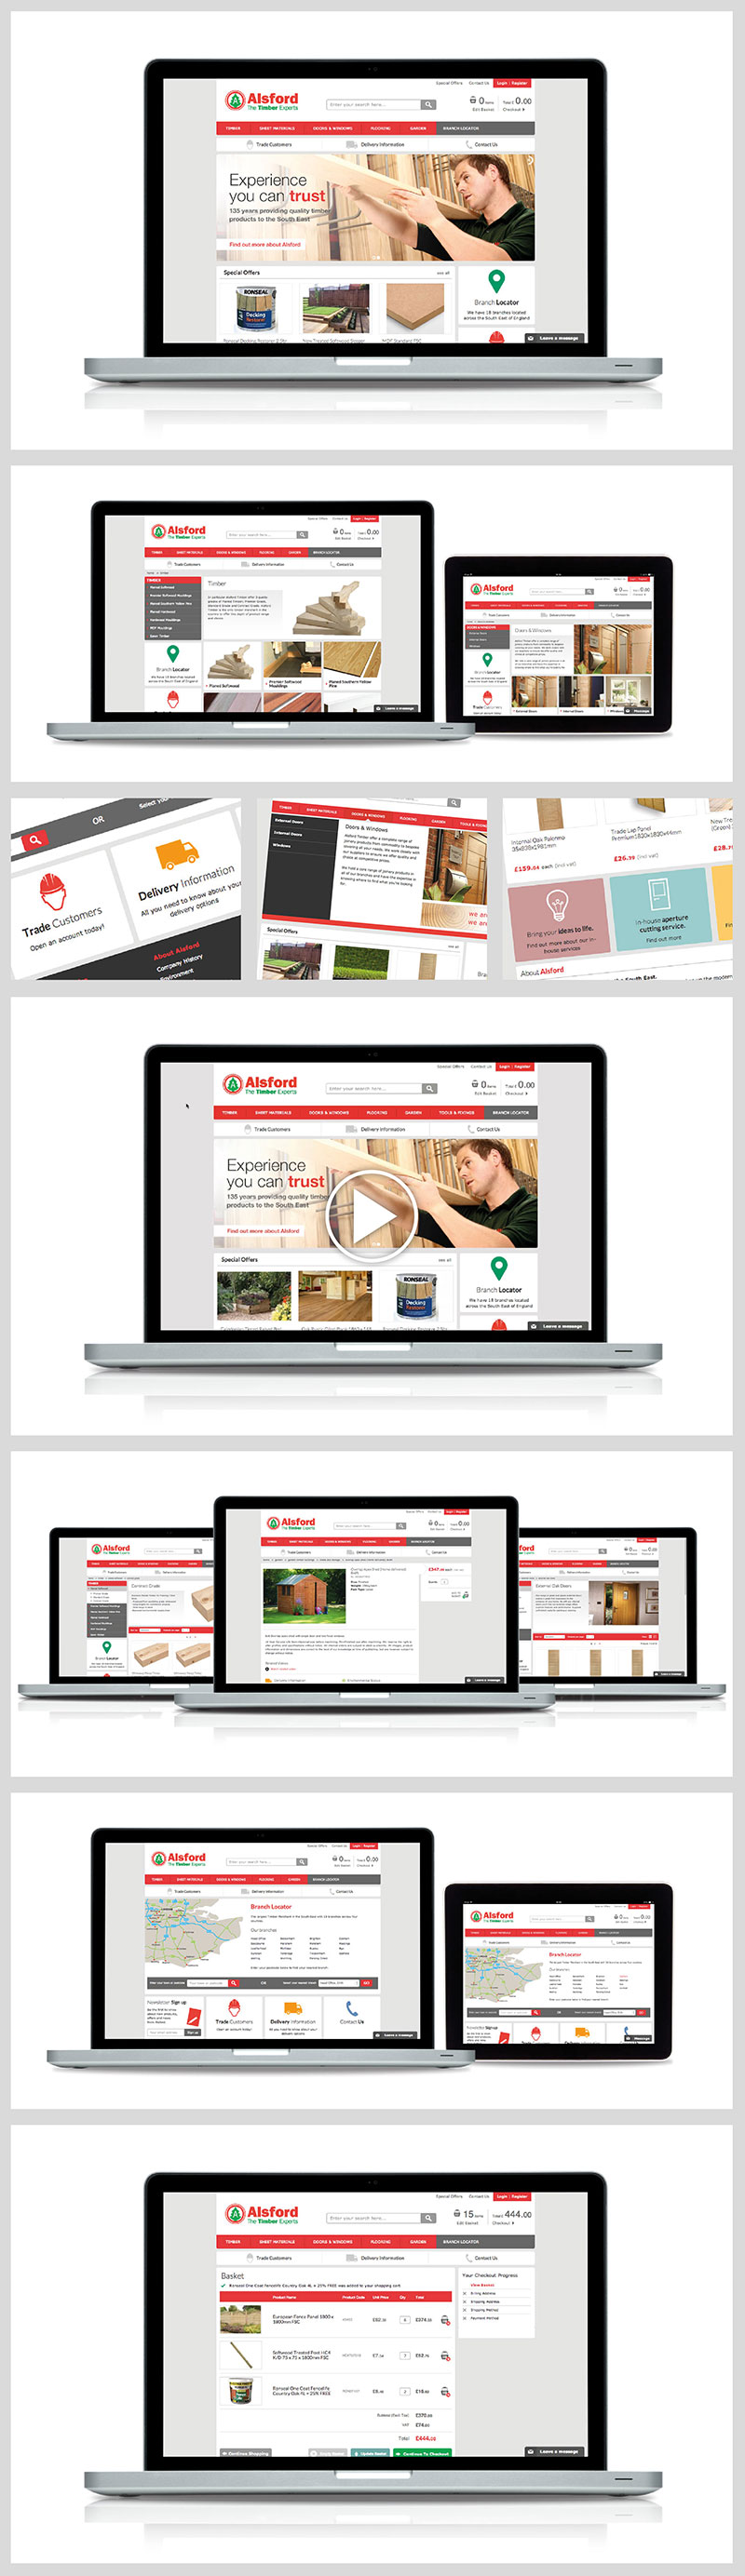 alsford-timber_ecommerce-website-pinterest